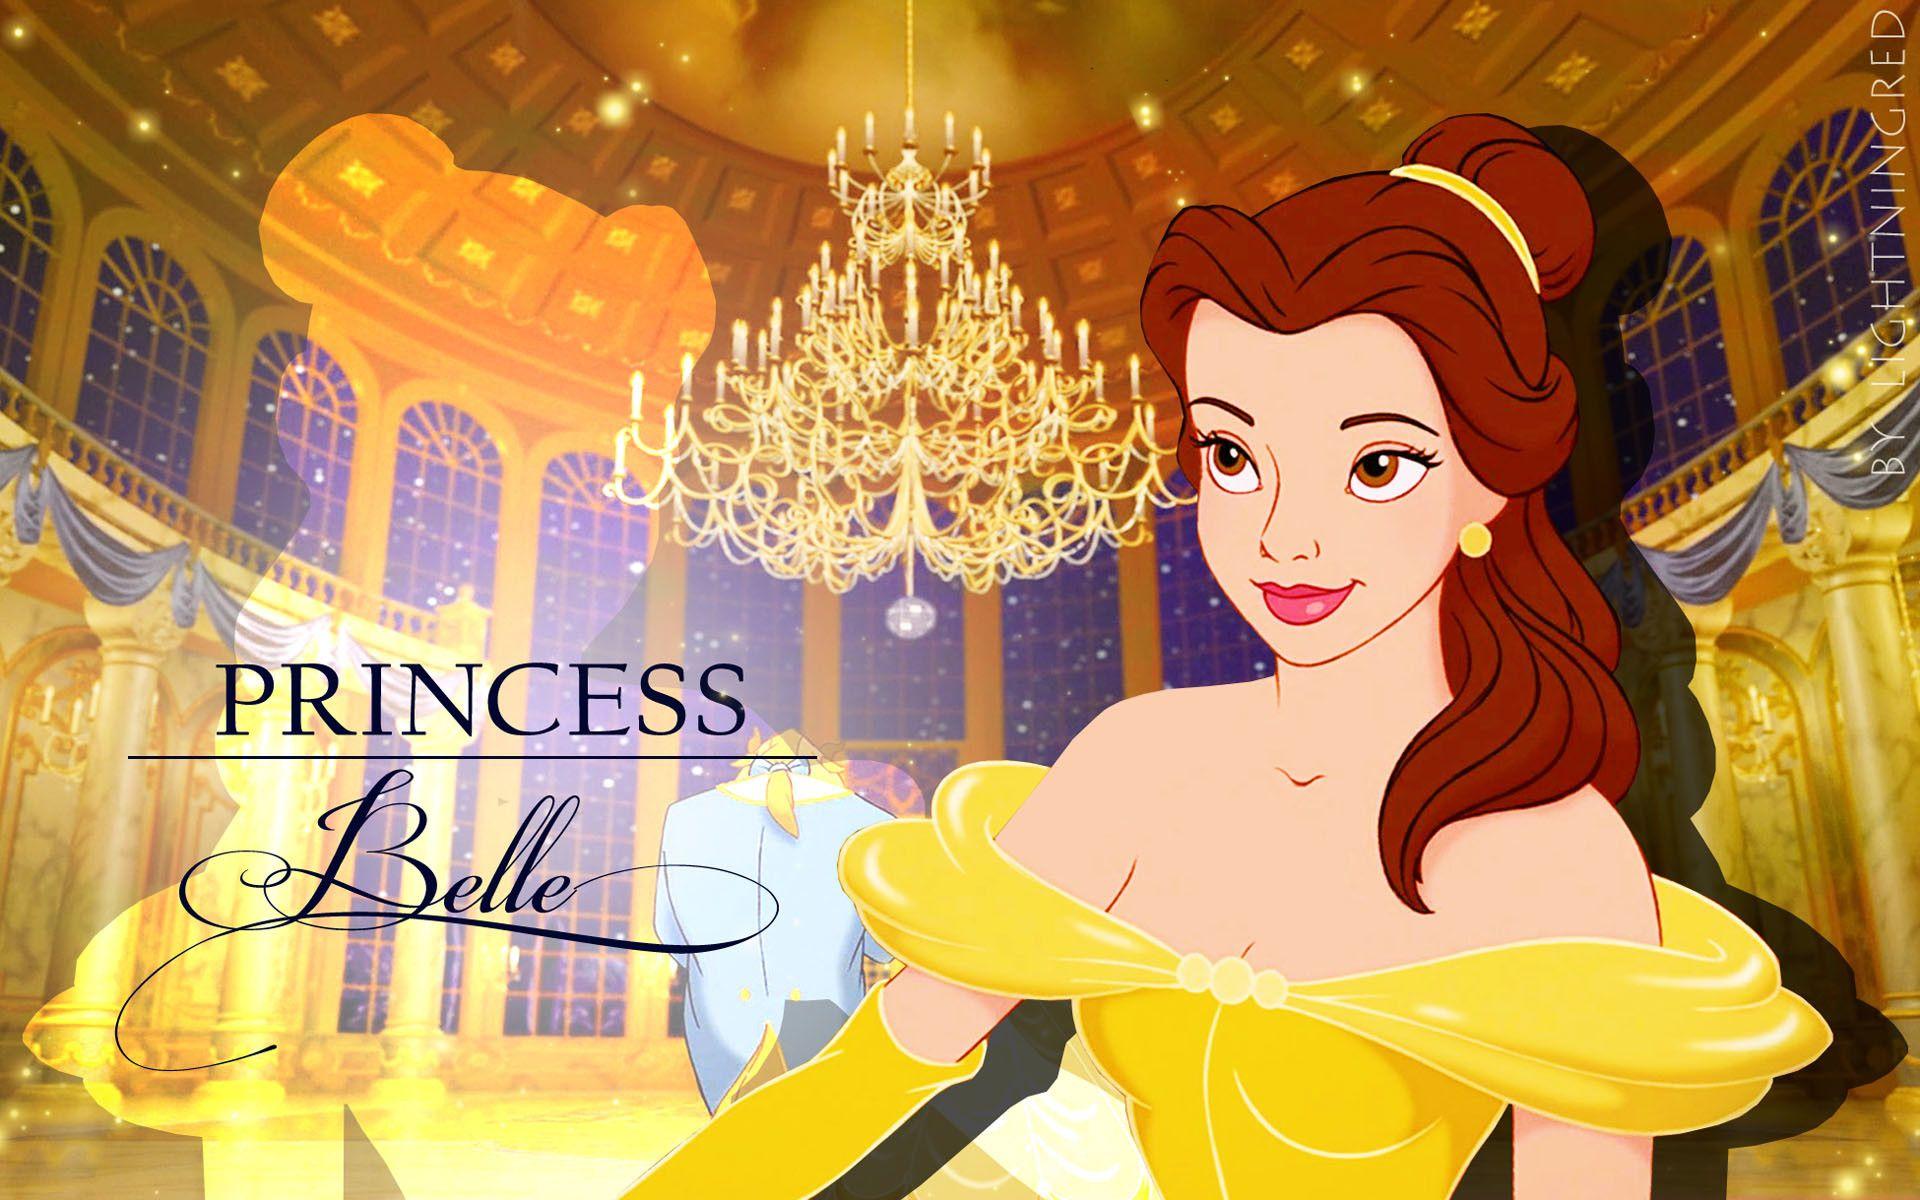 Disney Belle Wallpapers Top Free Disney Belle Backgrounds Wallpaperaccess